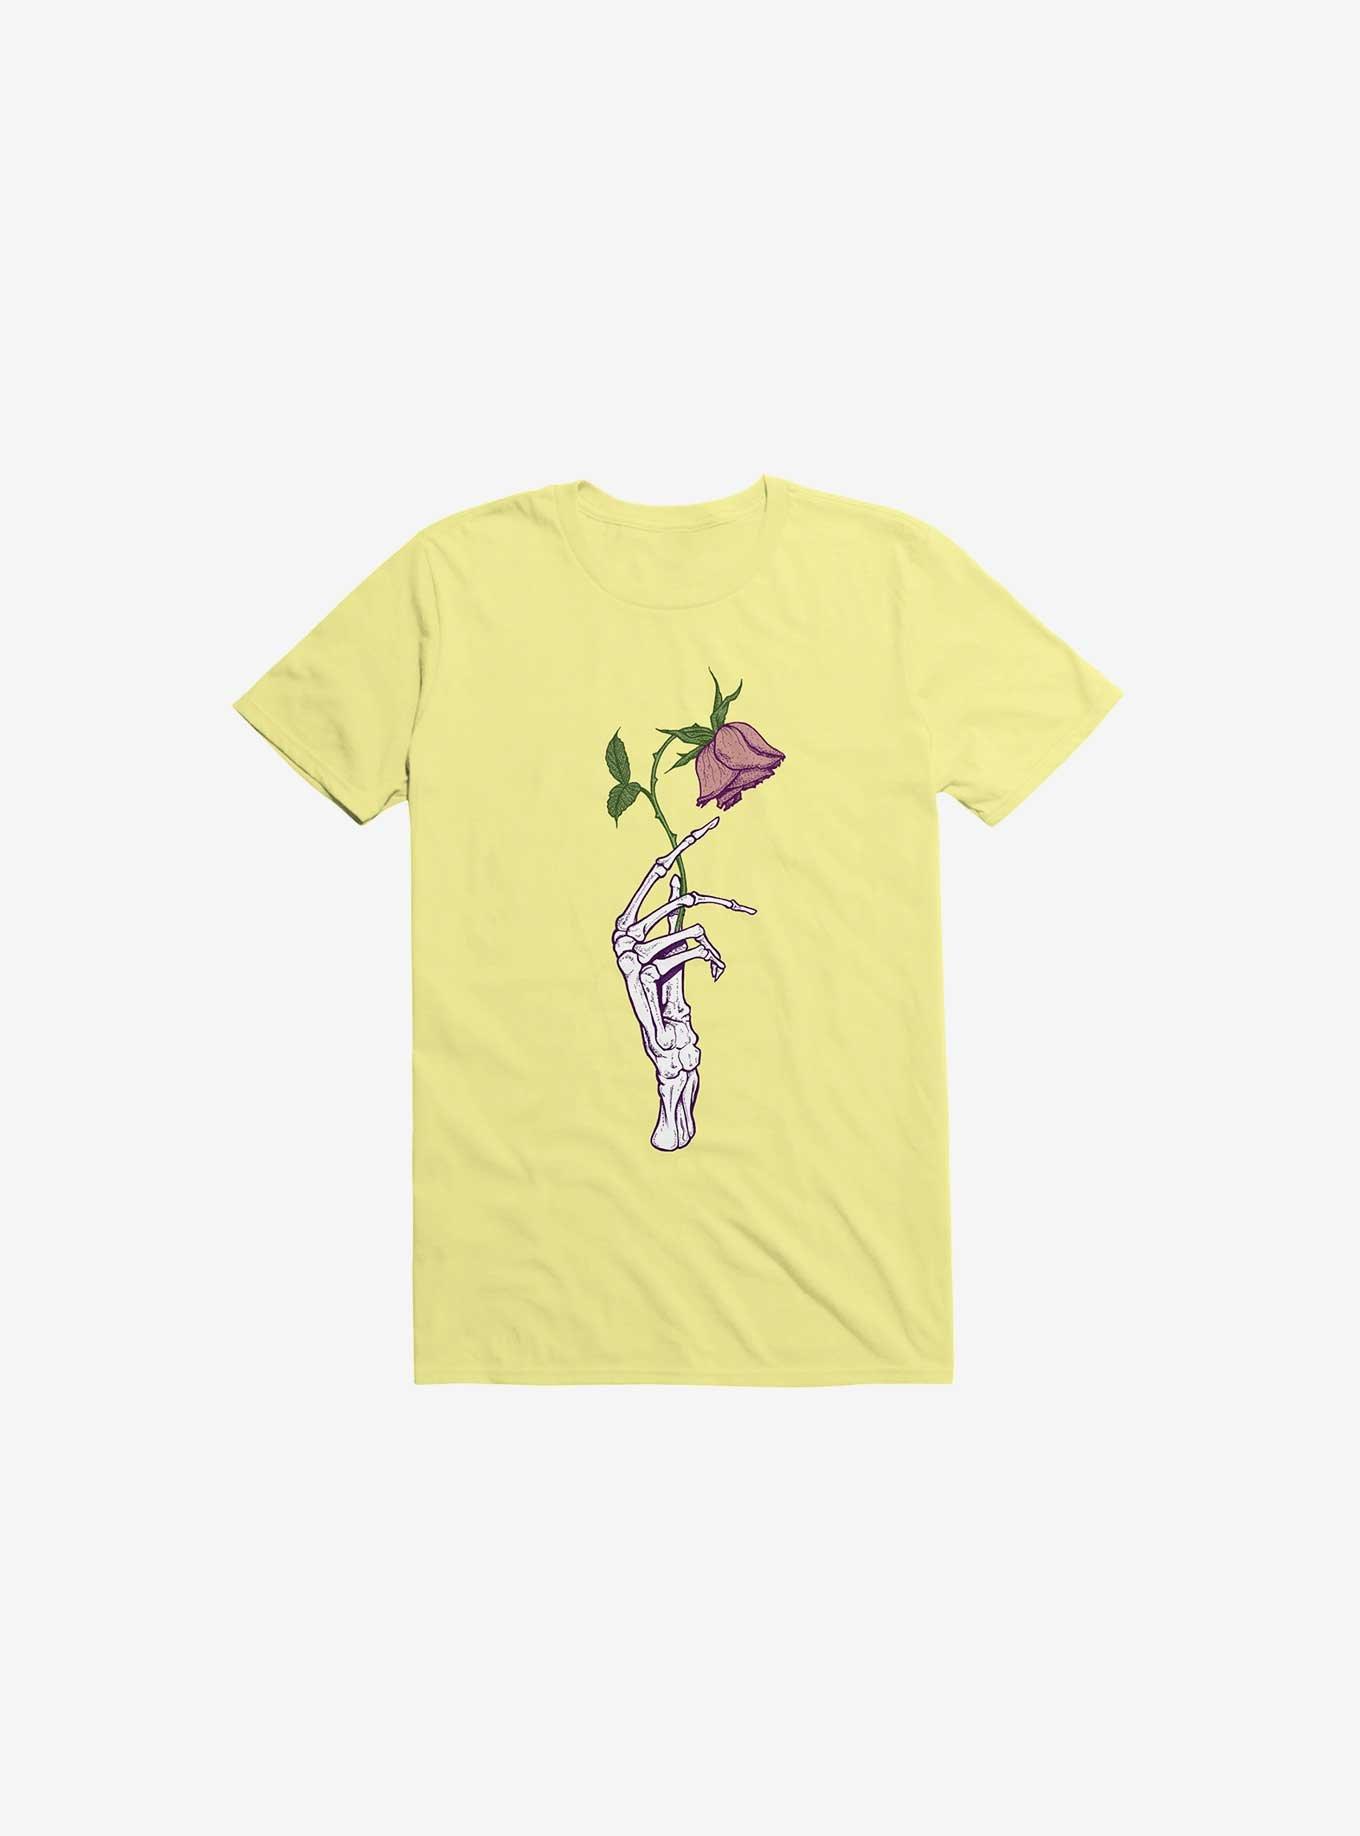 The Dead Rose Skeleton Hand Corn Silk Yellow T-Shirt